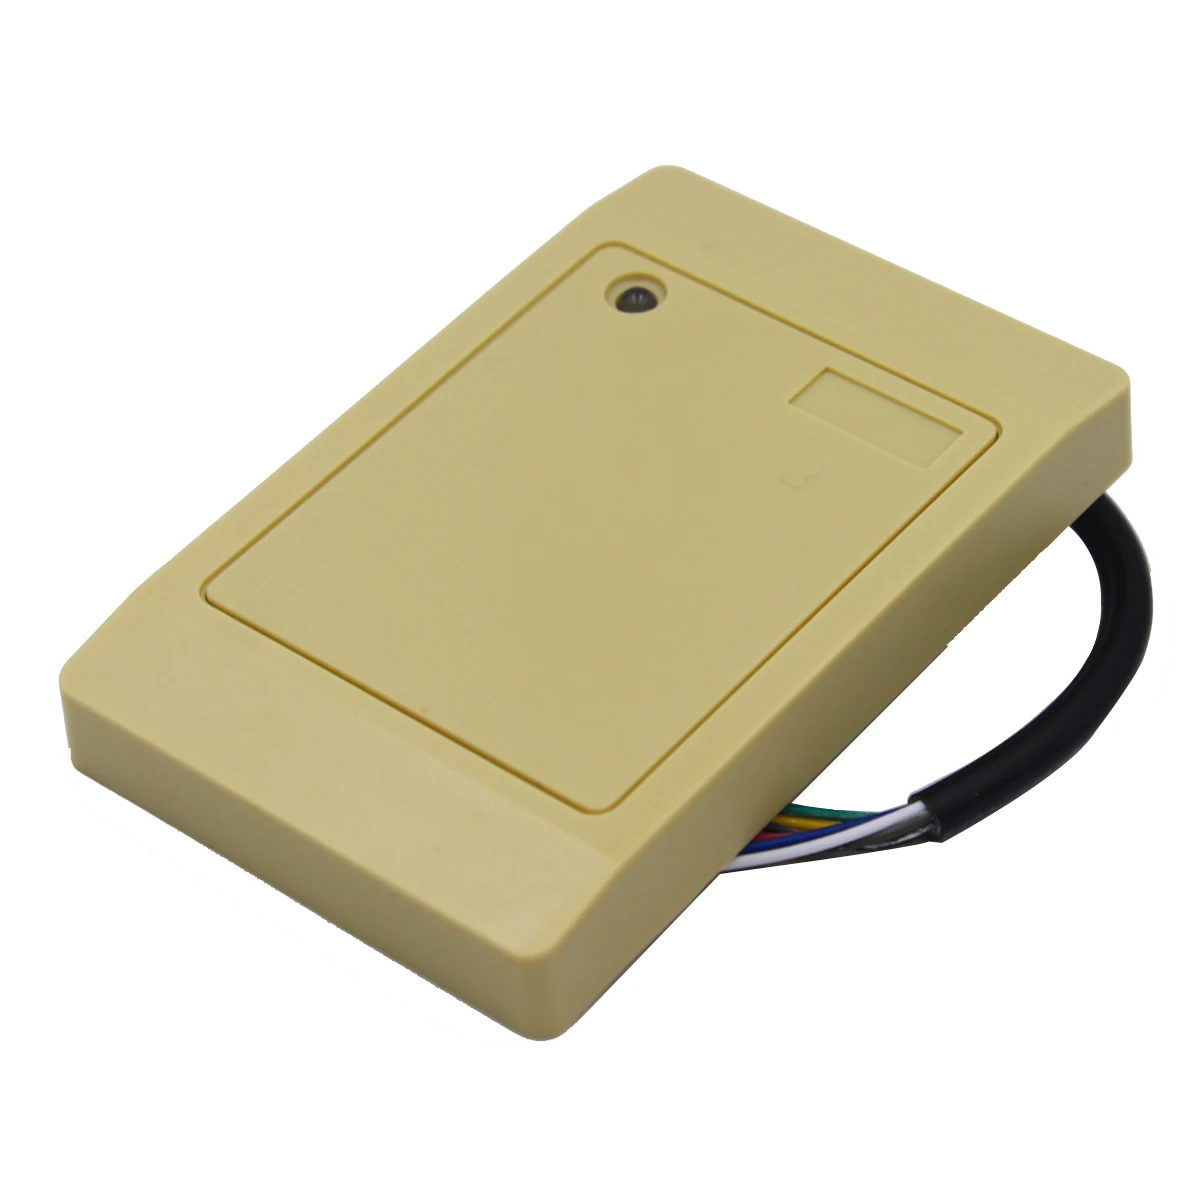 RFID считыватель карт IC Водонепроницаемый Wiegand WG26 34 125 кГц 13,56 МГц считыватель карт контроля доступа